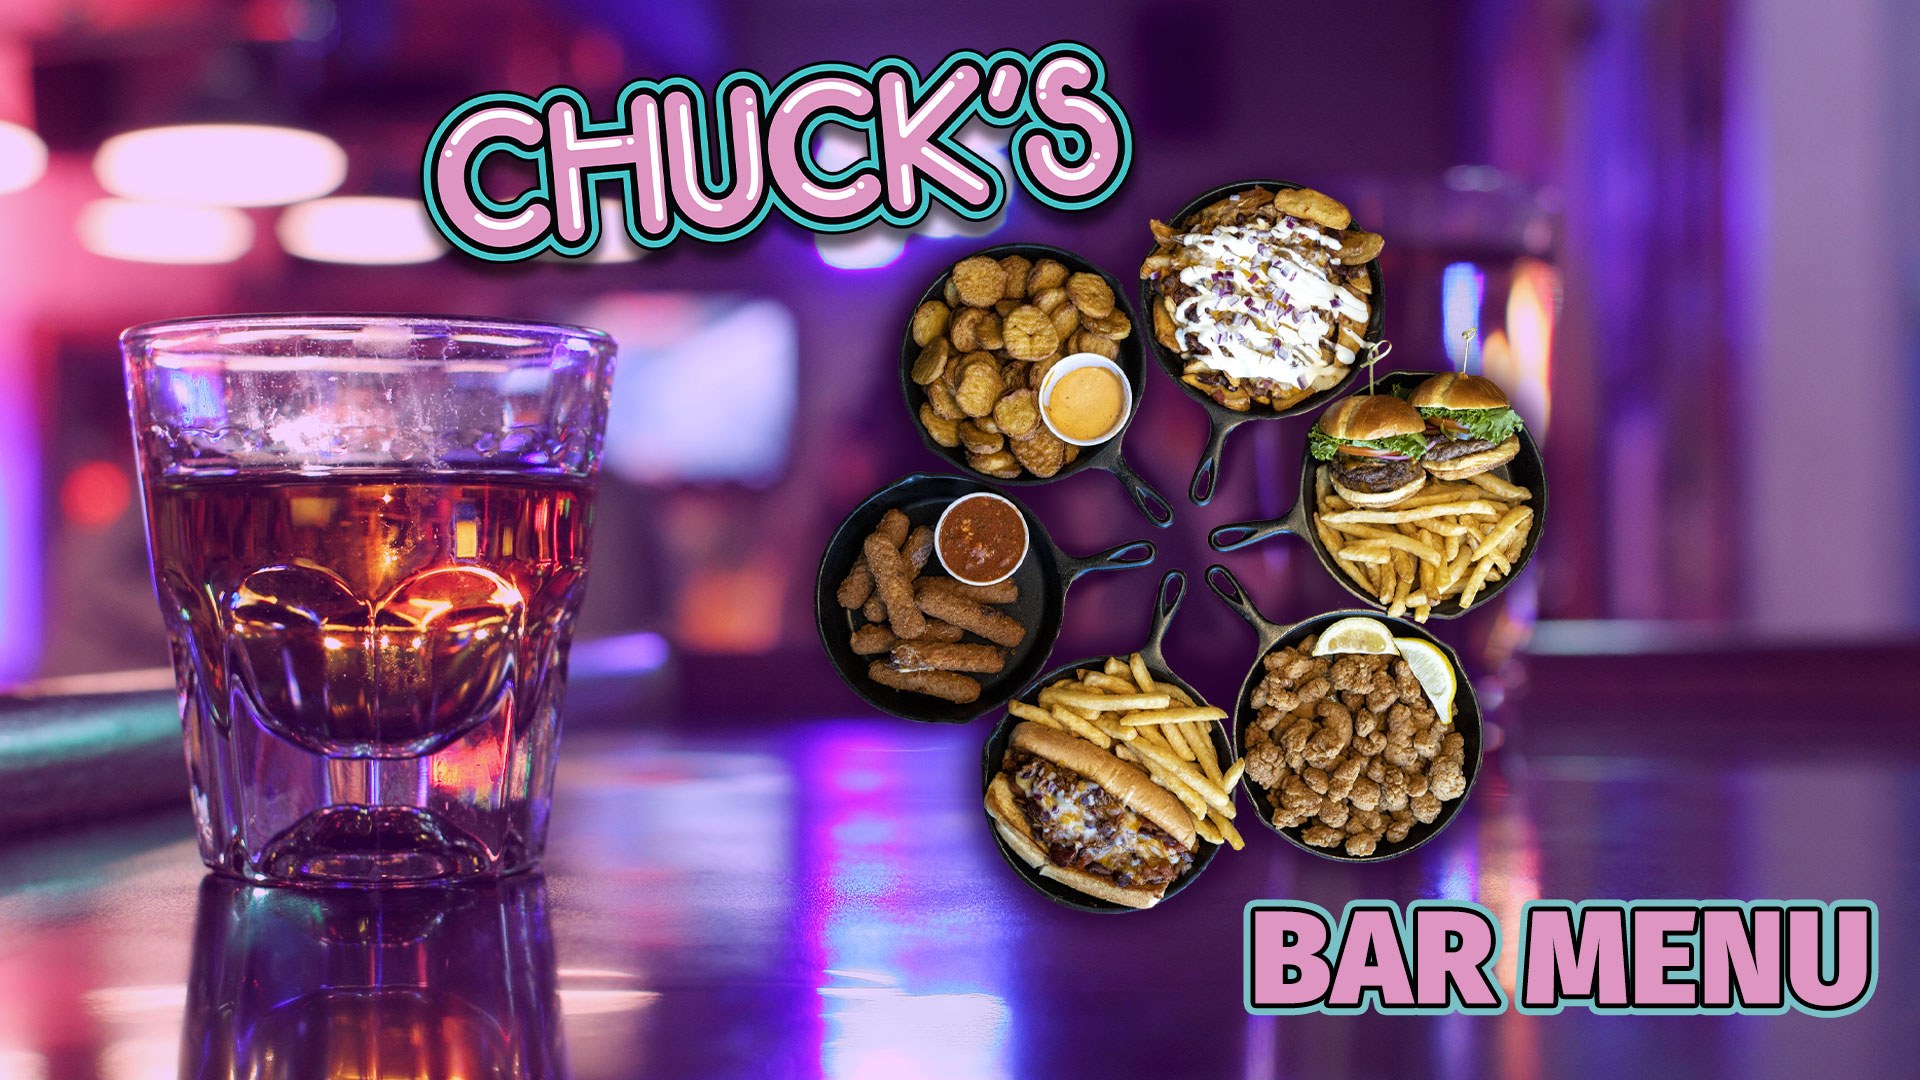 Chucks Bar Menu 16x9